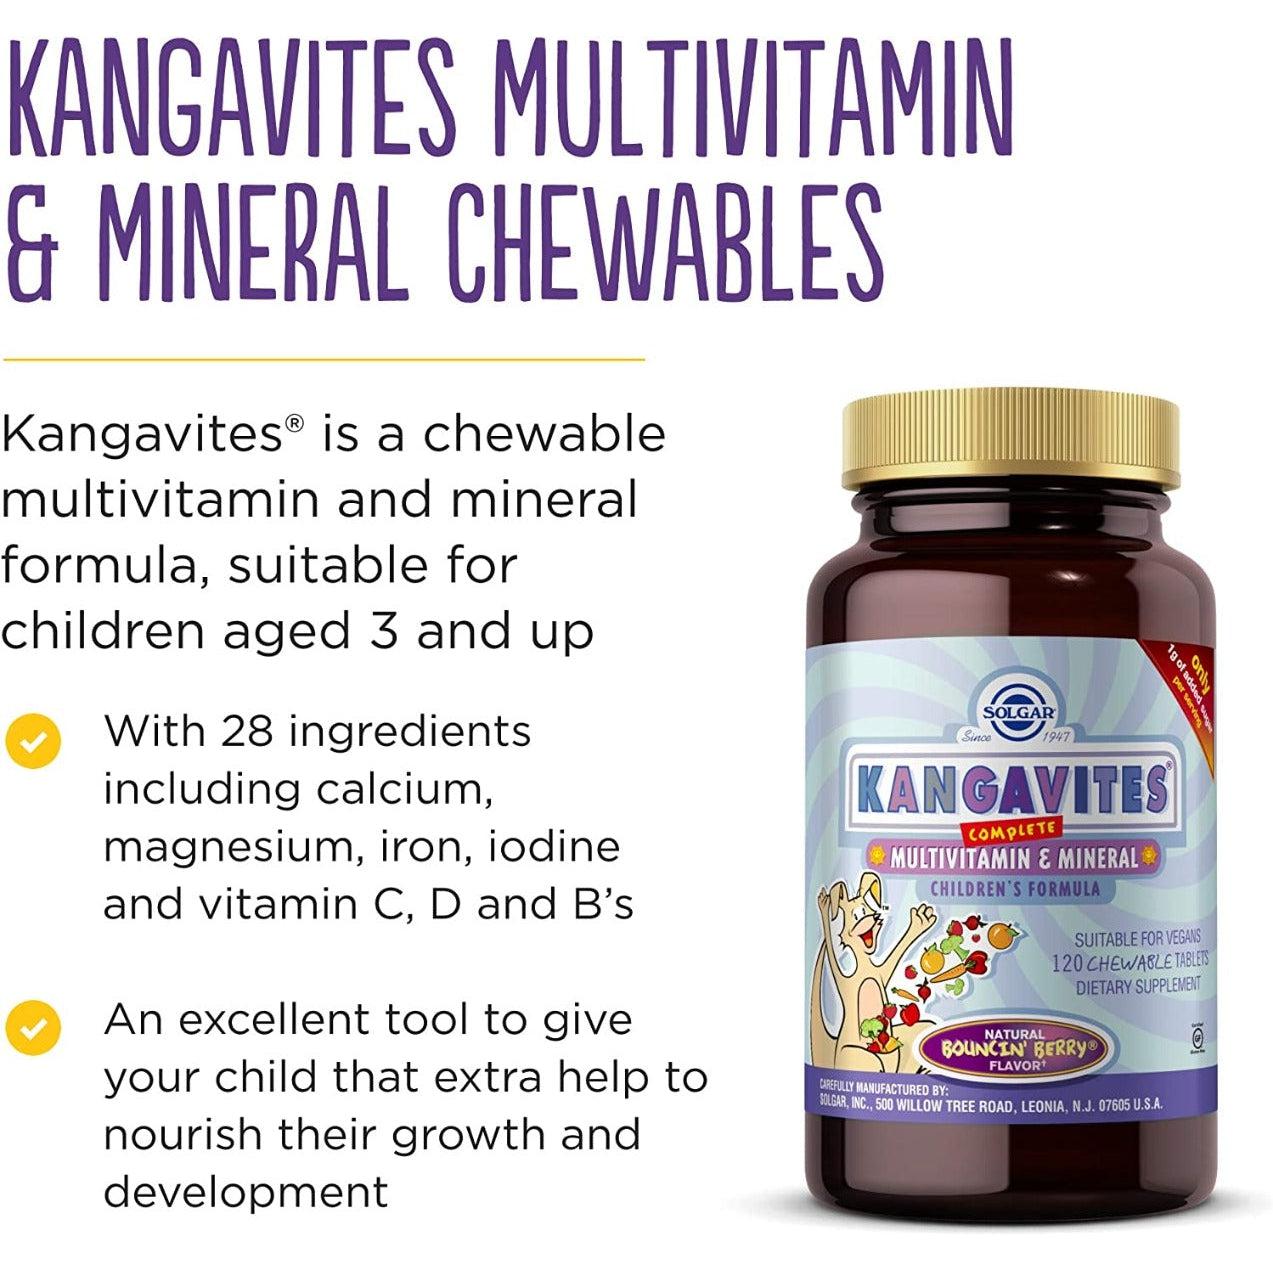 Solgar KANGAVITES Complete Multivitamin & Mineral Children's Formula 120 Chewable Tablets